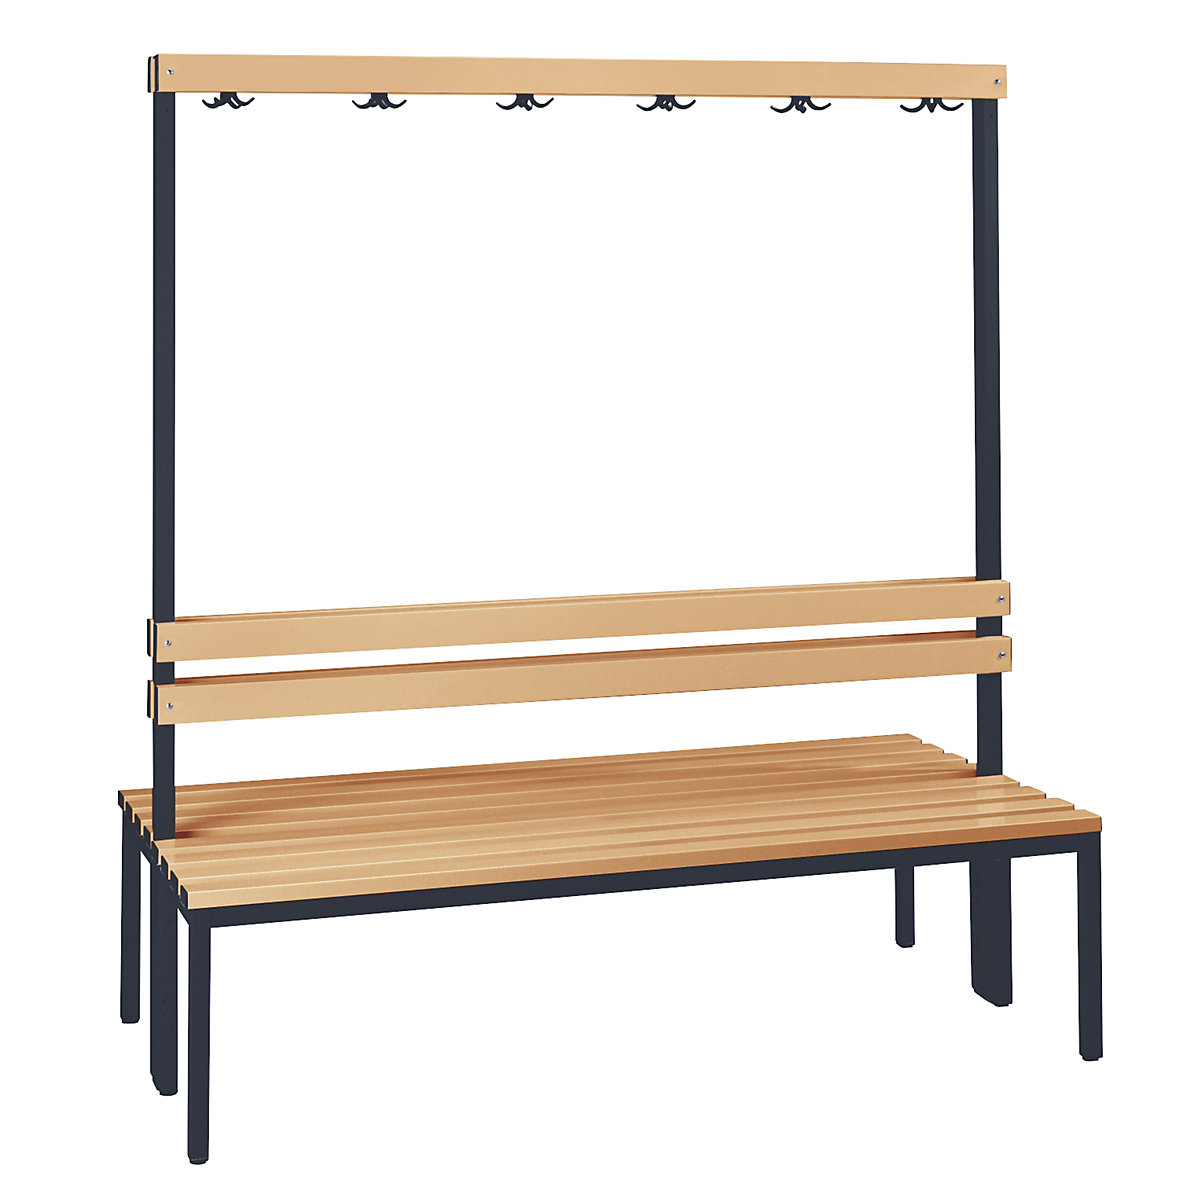 Wolf – Cloakroom bench, double sided, length 1500 mm, beechwood slats, 2 x 6 double hooks